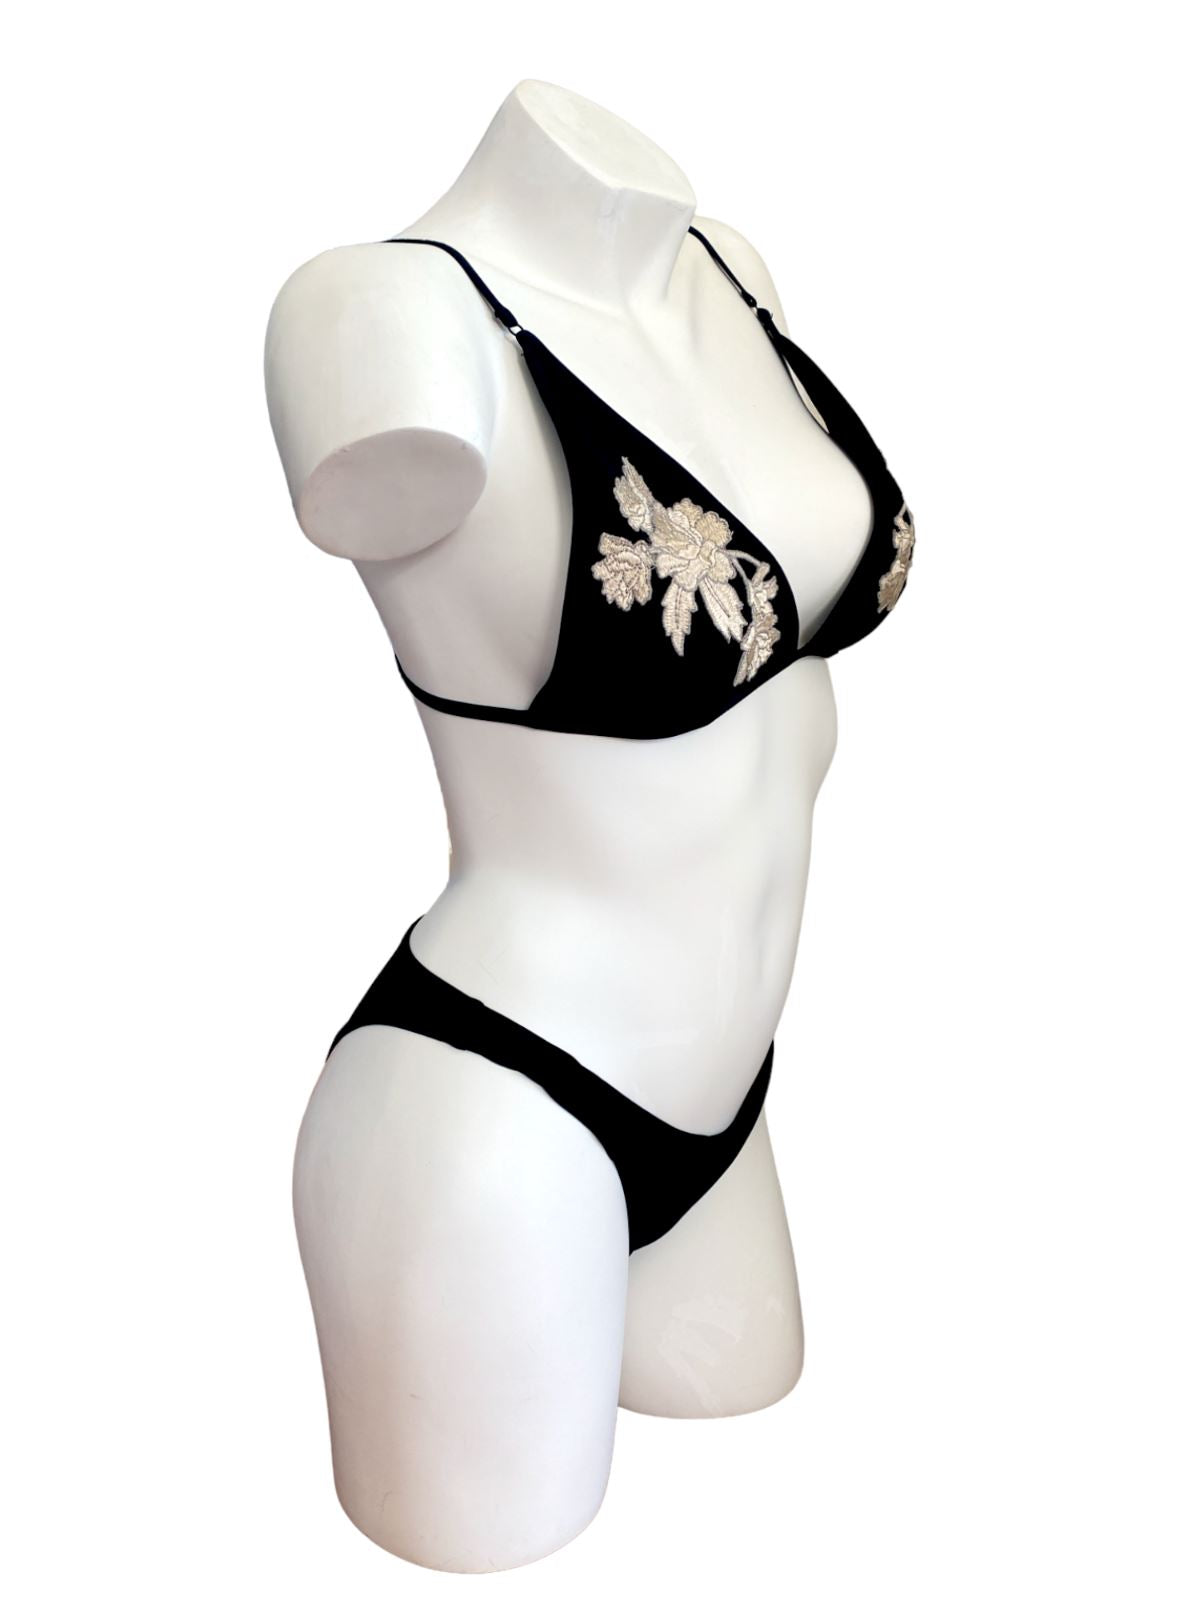 Zimmermann Divinity Bonded Motif Bikini Set |BLack Flower Applique Triangle Top